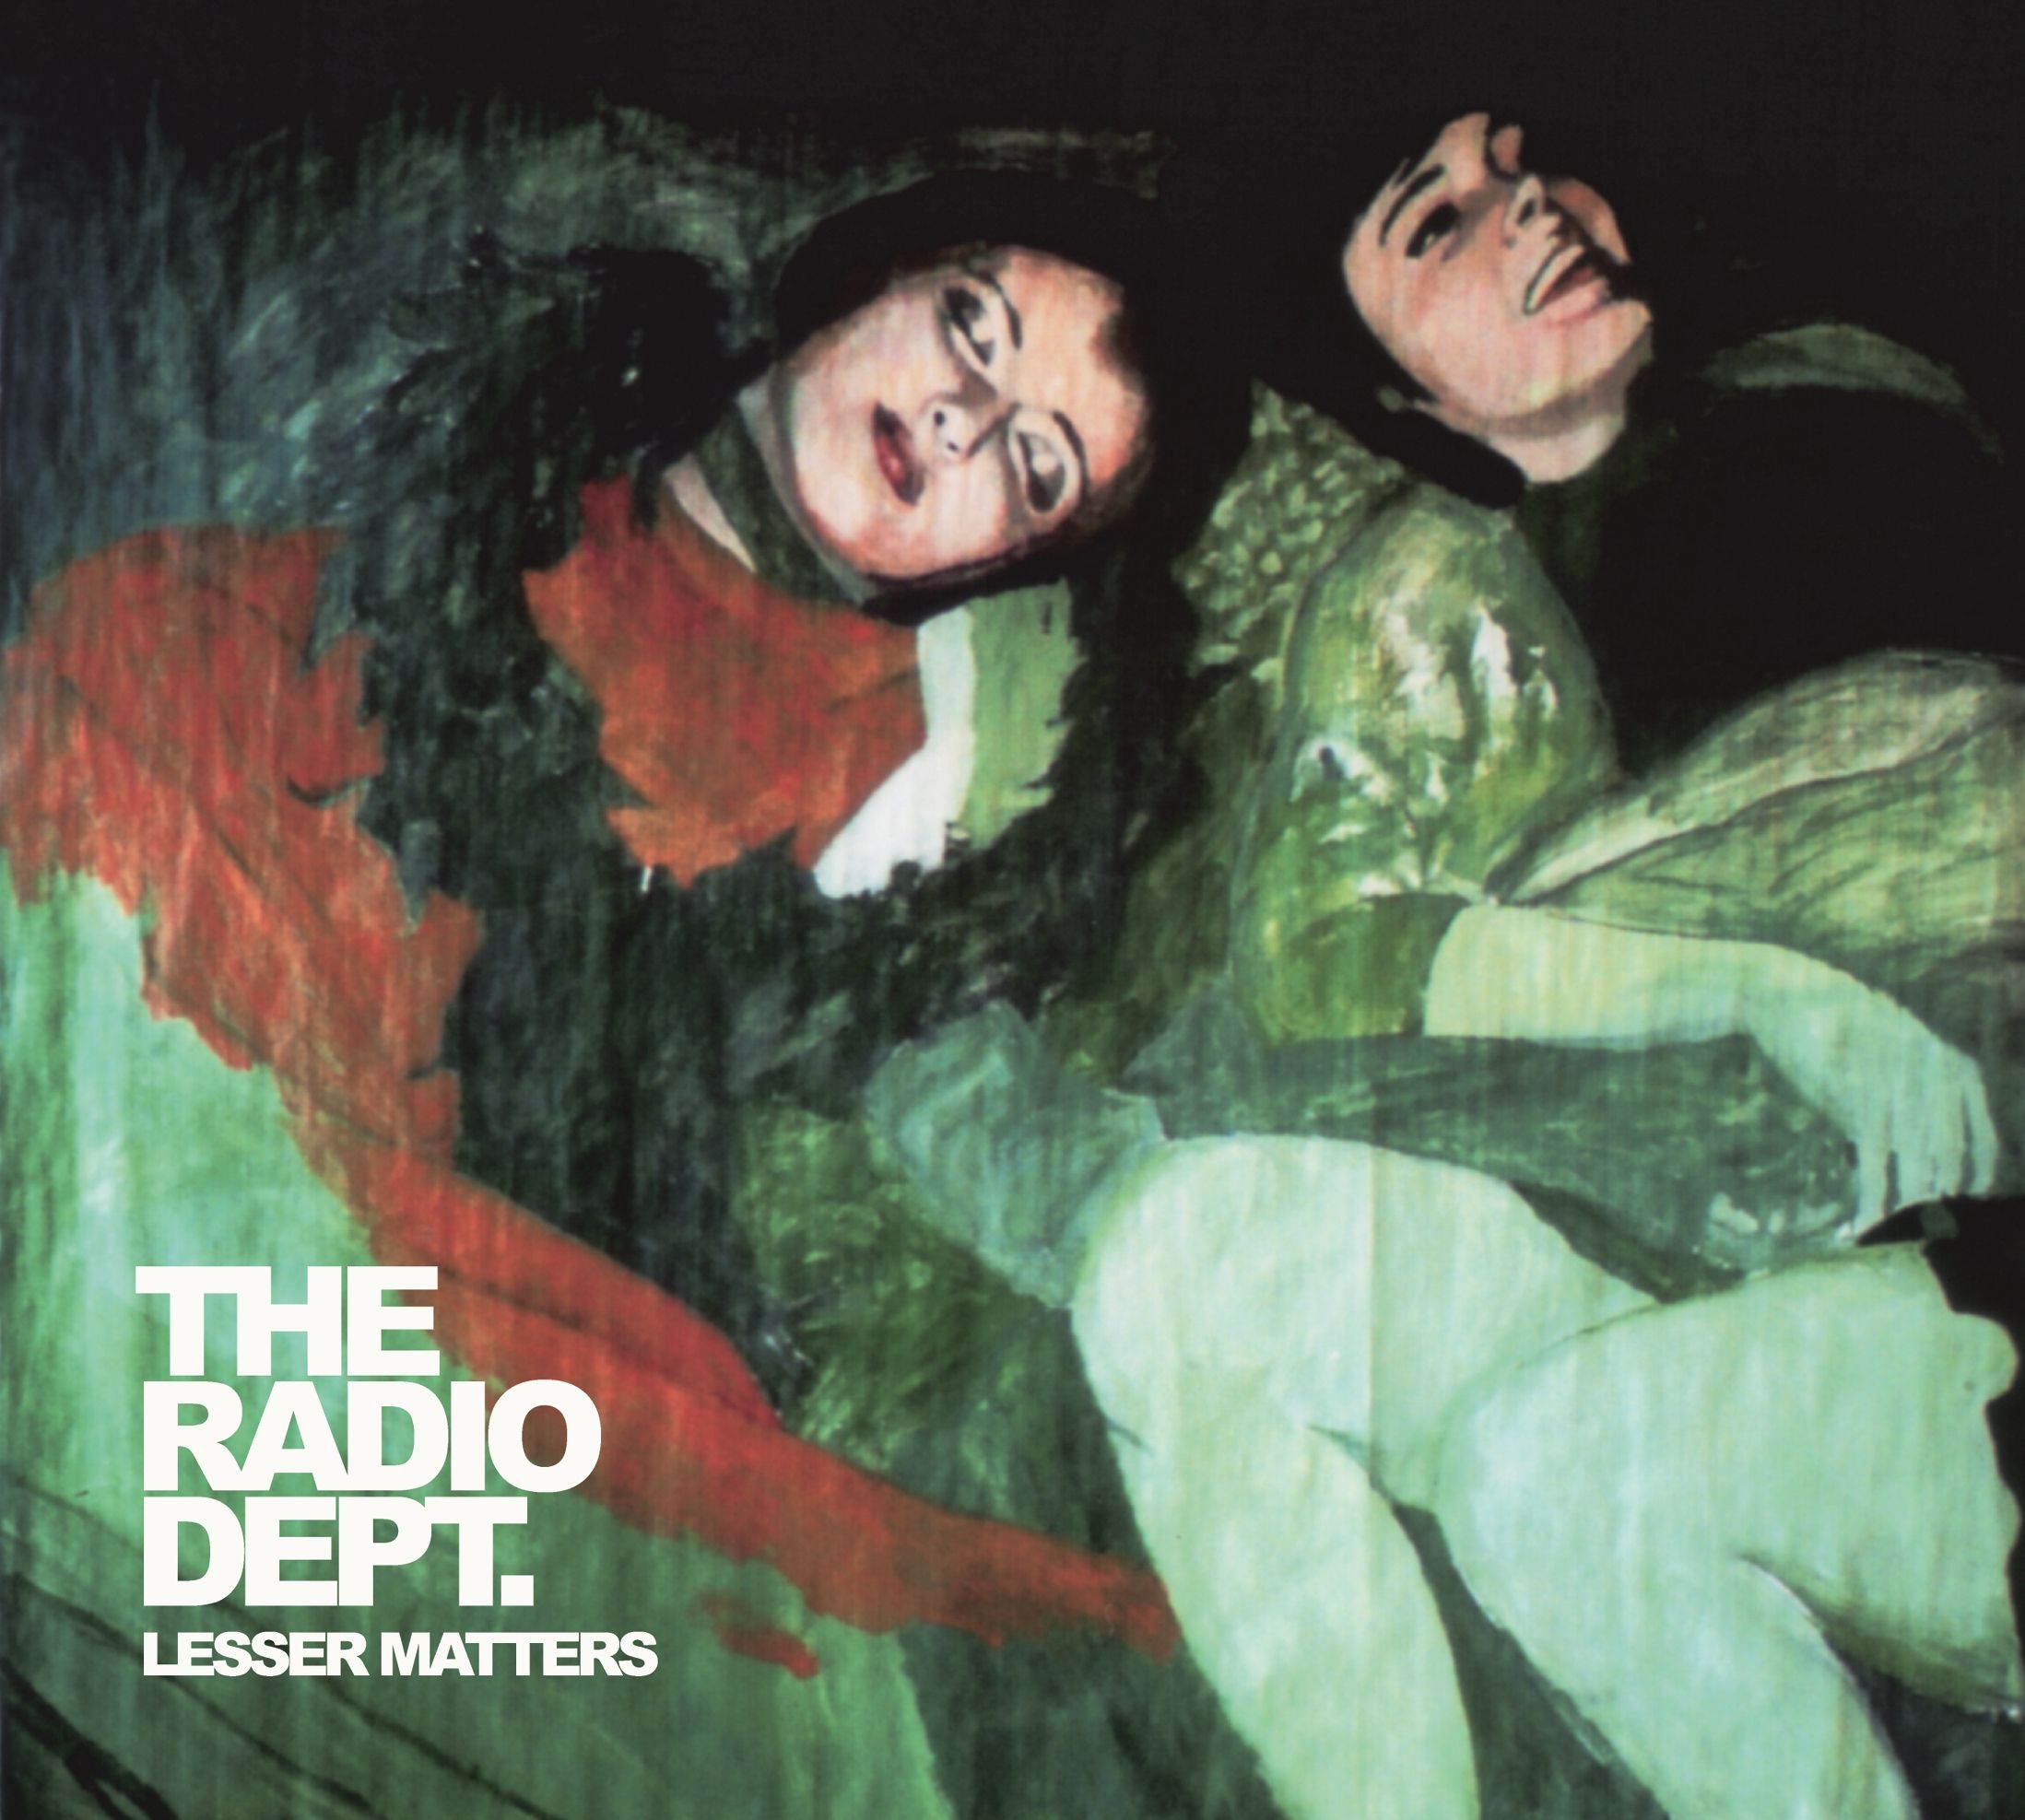 Imagem do álbum Lesser Matters do(a) artista The Radio Dept.